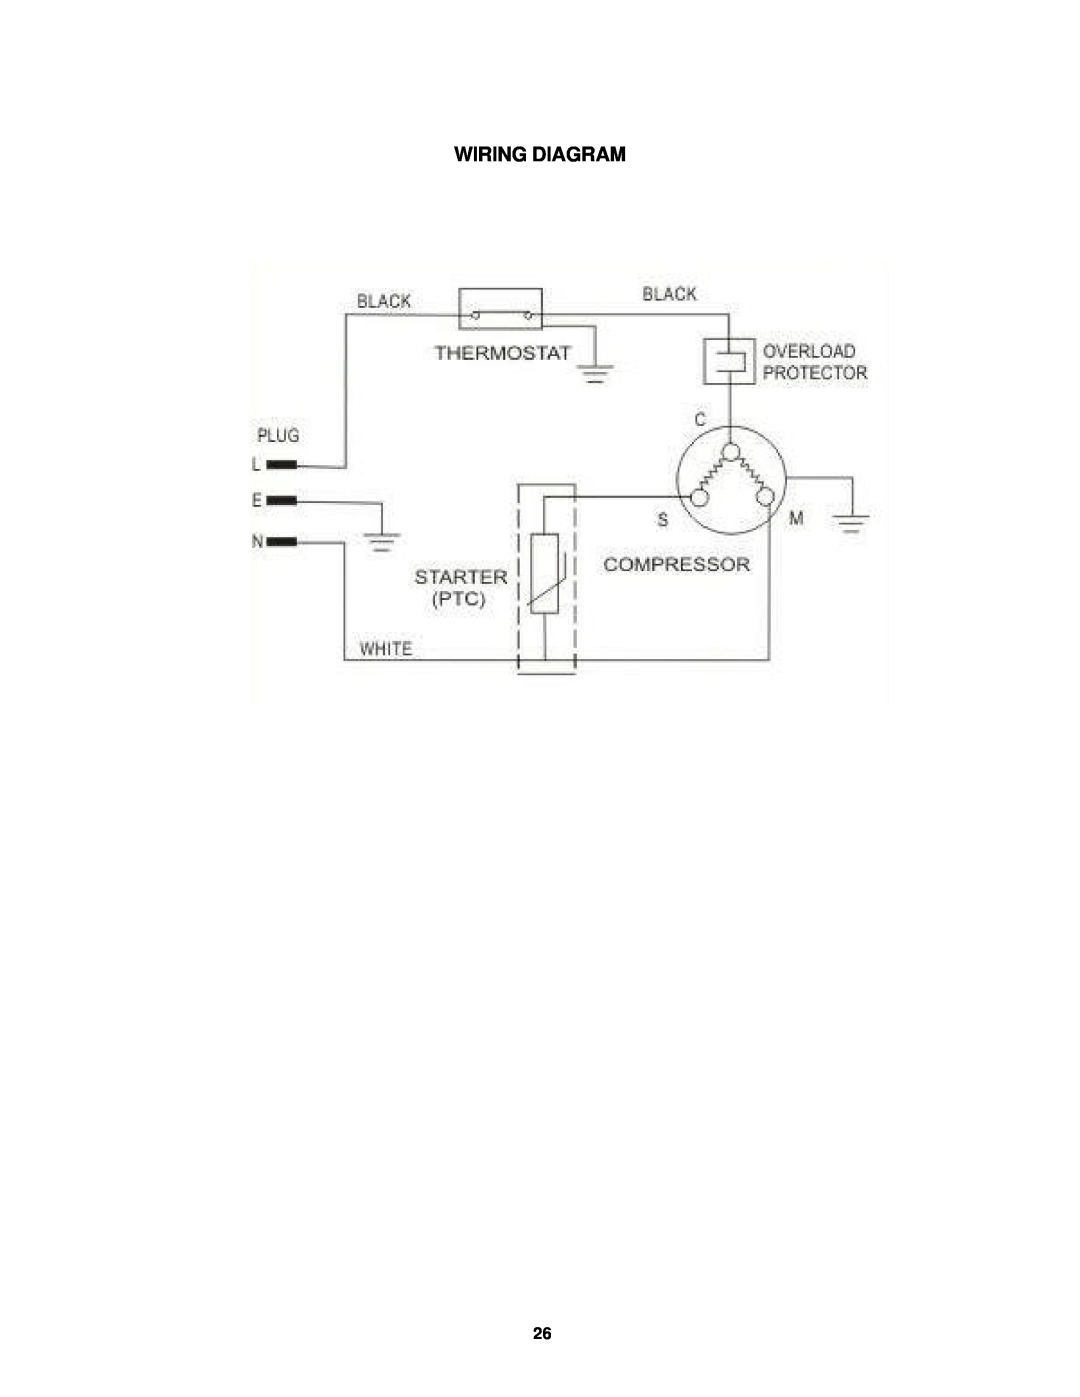 Avanti BD6000 instruction manual Wiring Diagram 